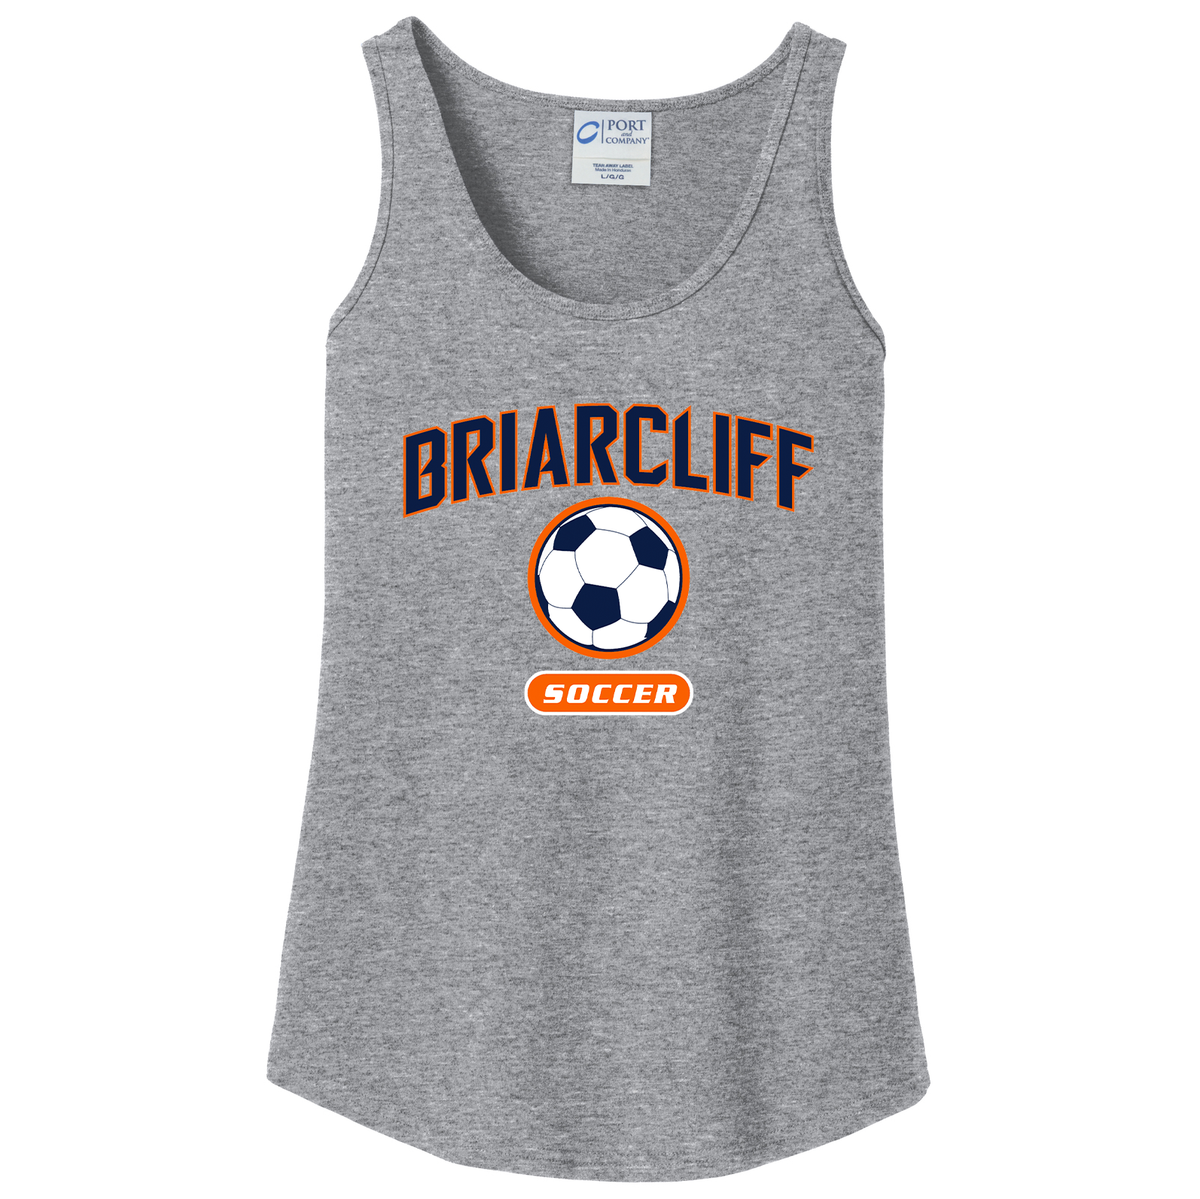 Briarcliff Soccer Women's Tank Top